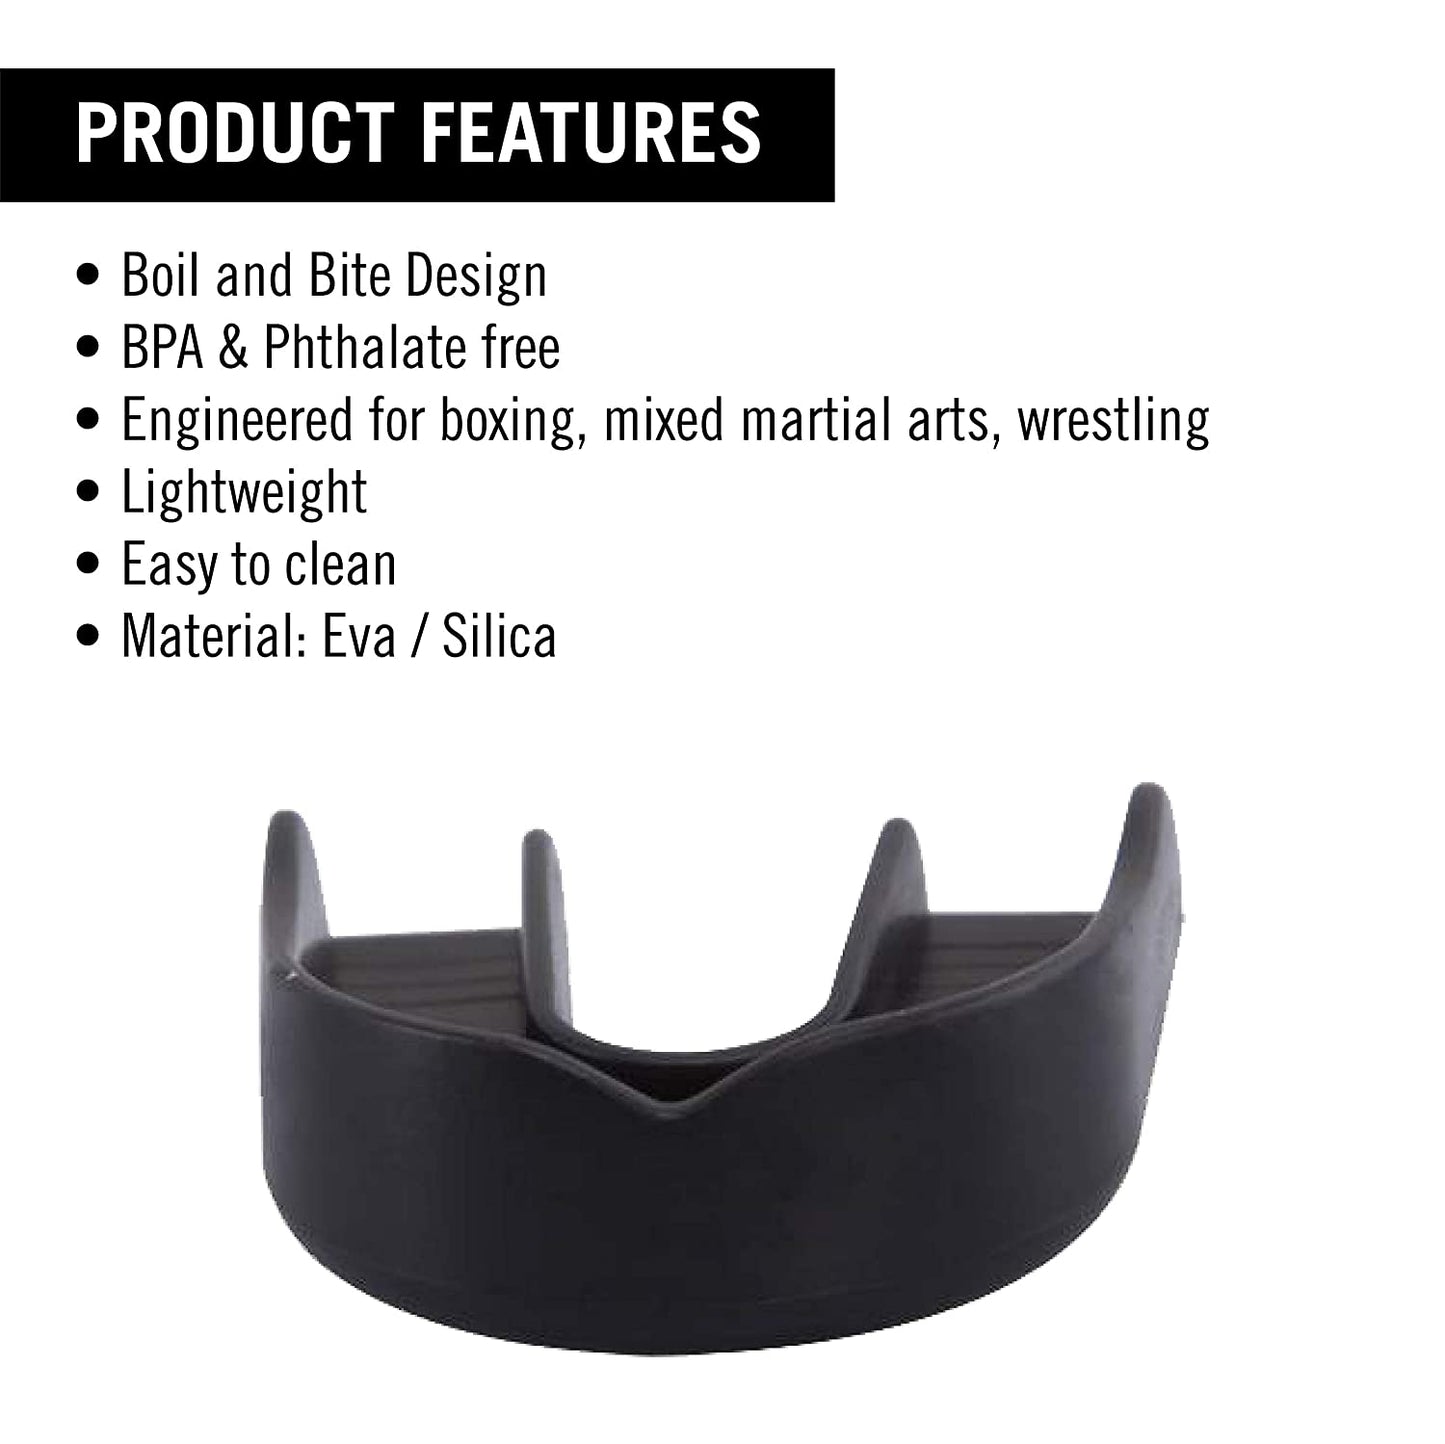 Everlast 4405BE Single Mouth Guard (Black) - Best Price online Prokicksports.com